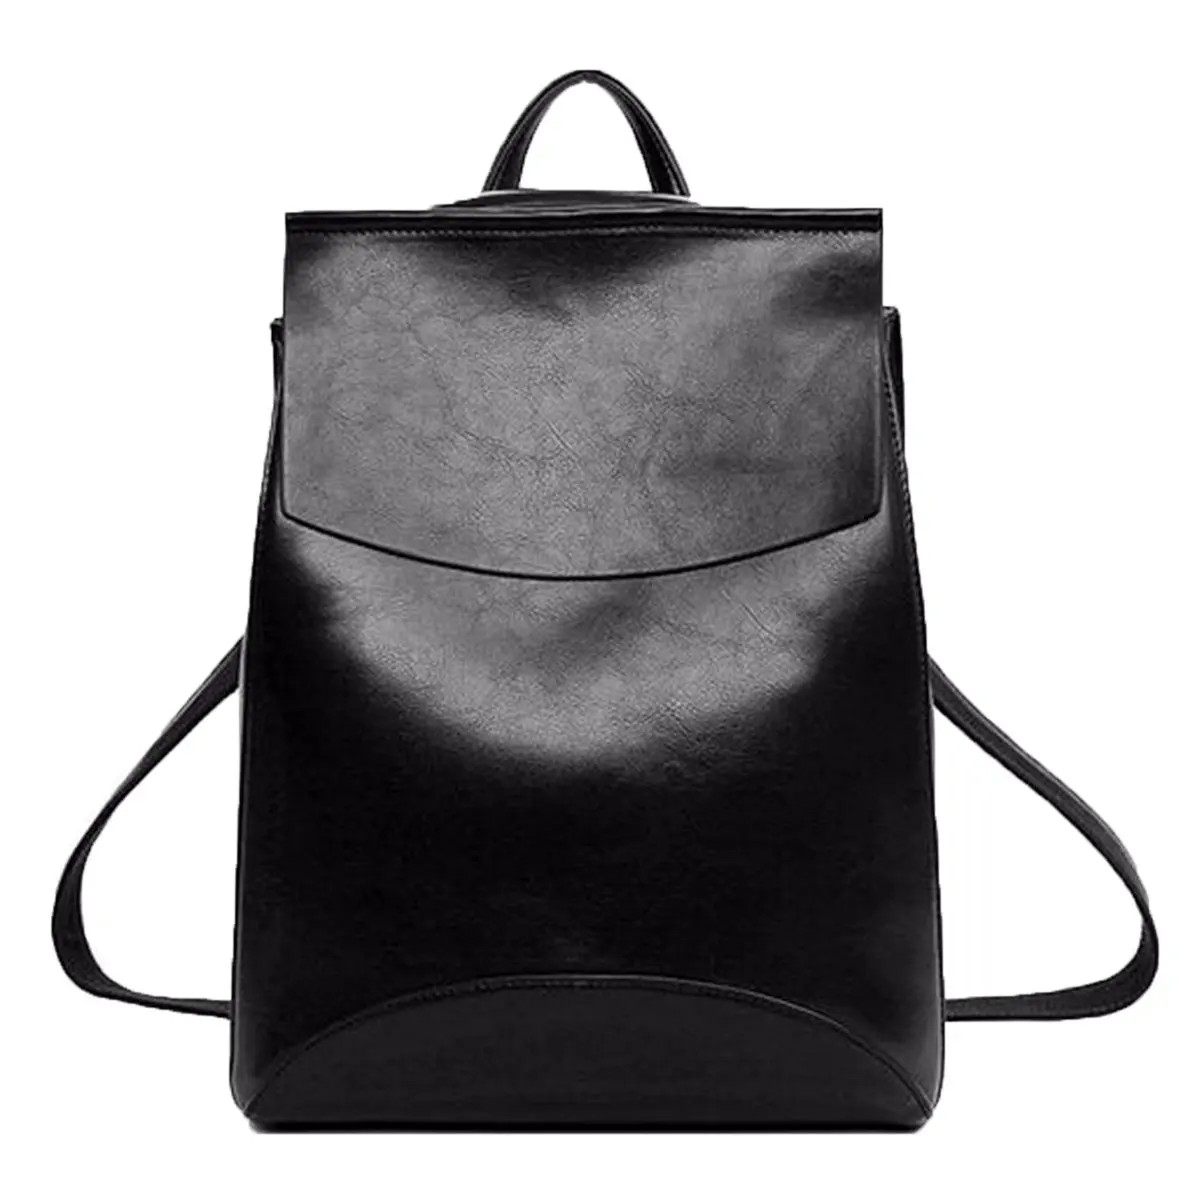 ladies leather backpack style handbag